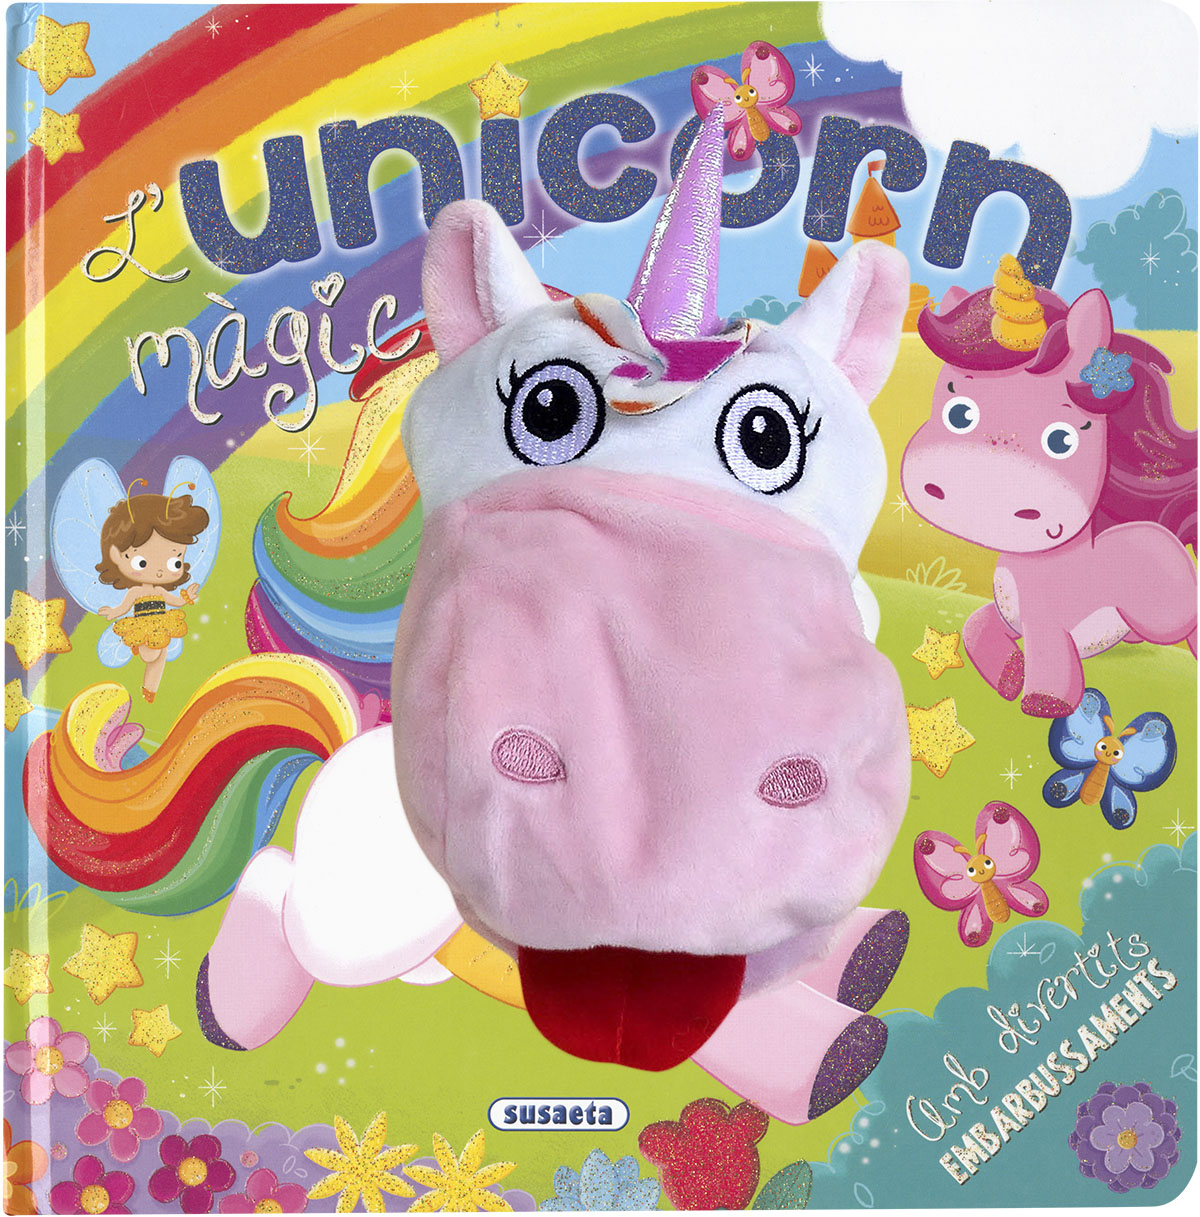 L'unicorn mgic